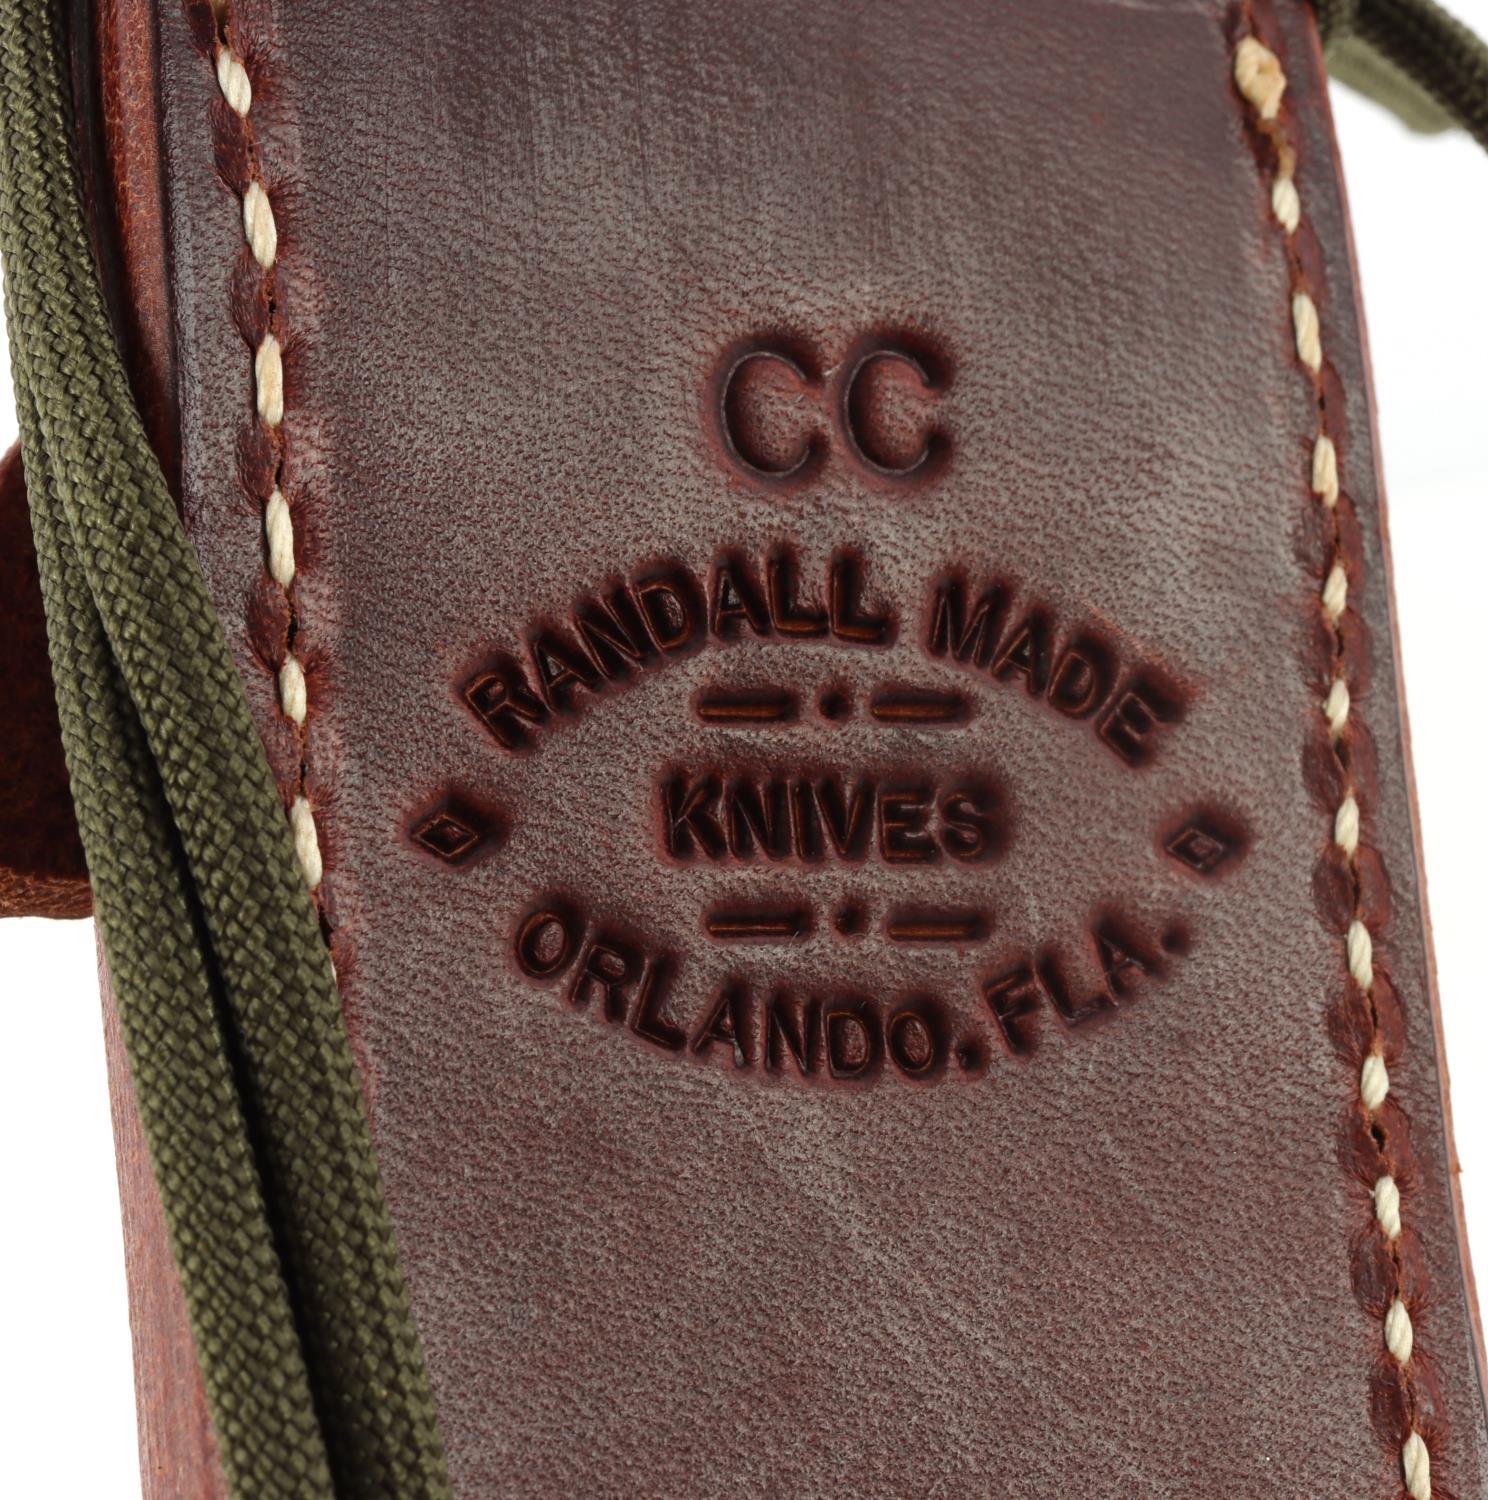 RANDALL MADE KNIFE COMBAT COMPANION W SHEATH